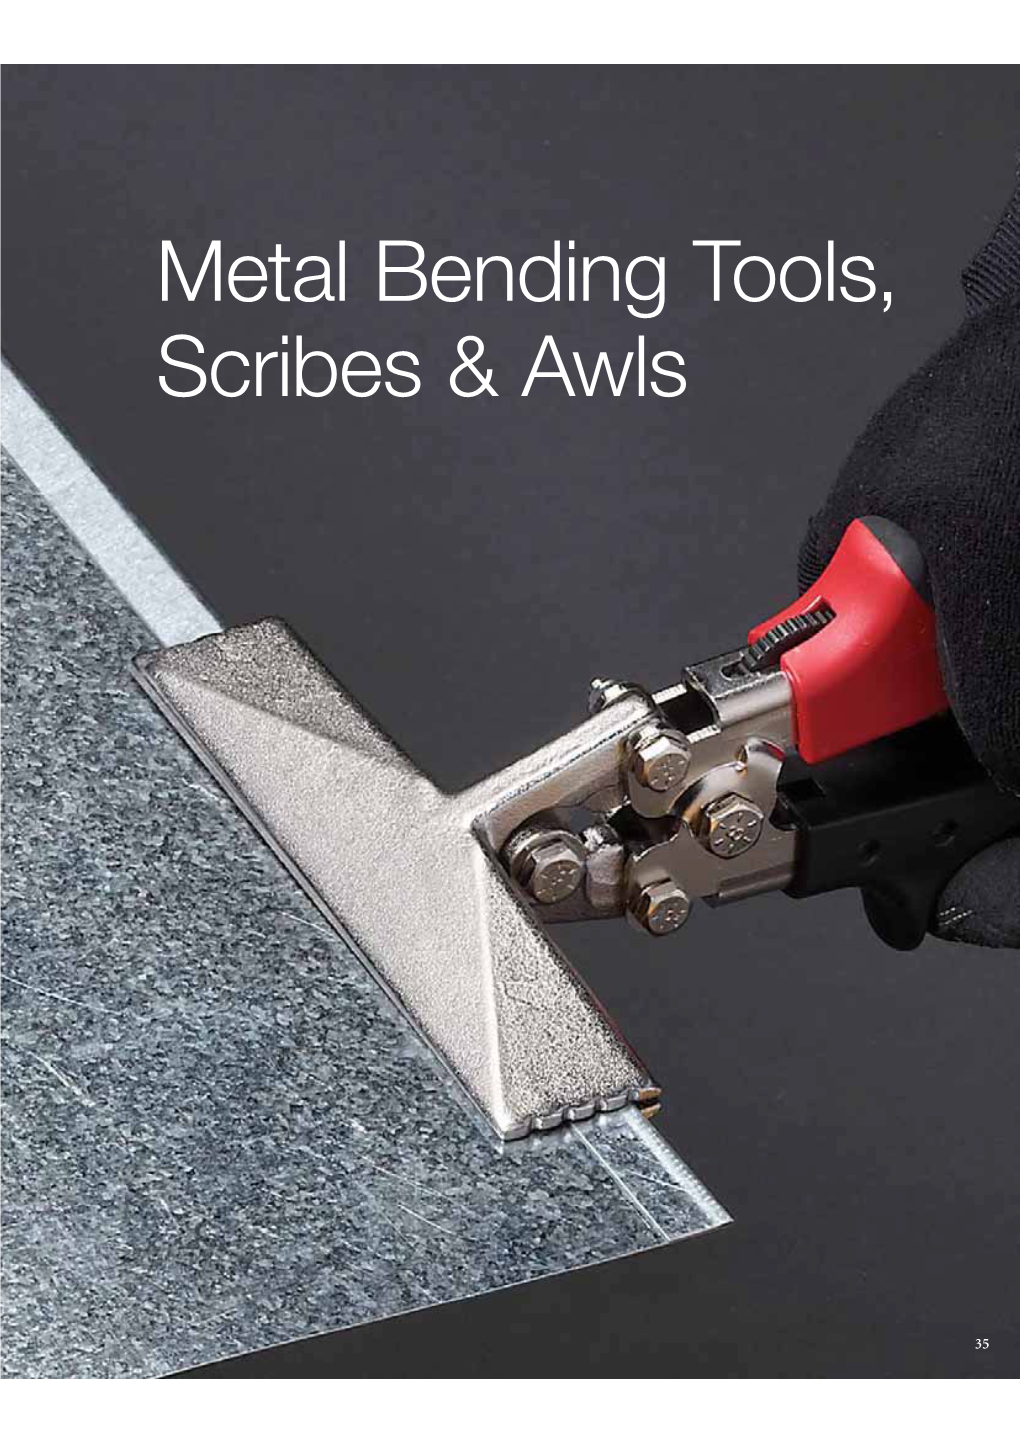 Metal Bending Tools, Scribes & Awls